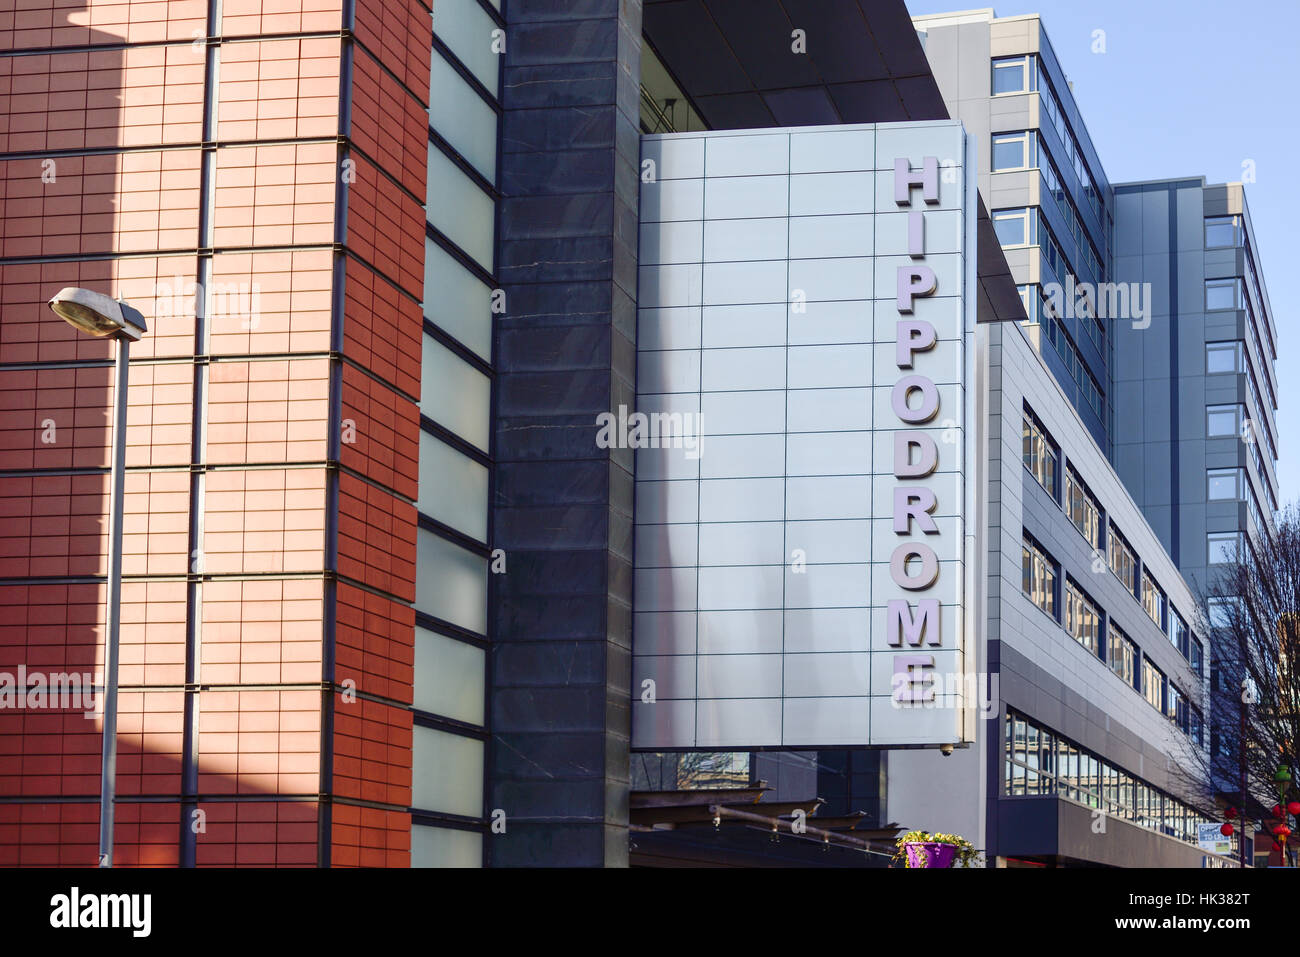 Birmingham City centre,UK. Stock Photo